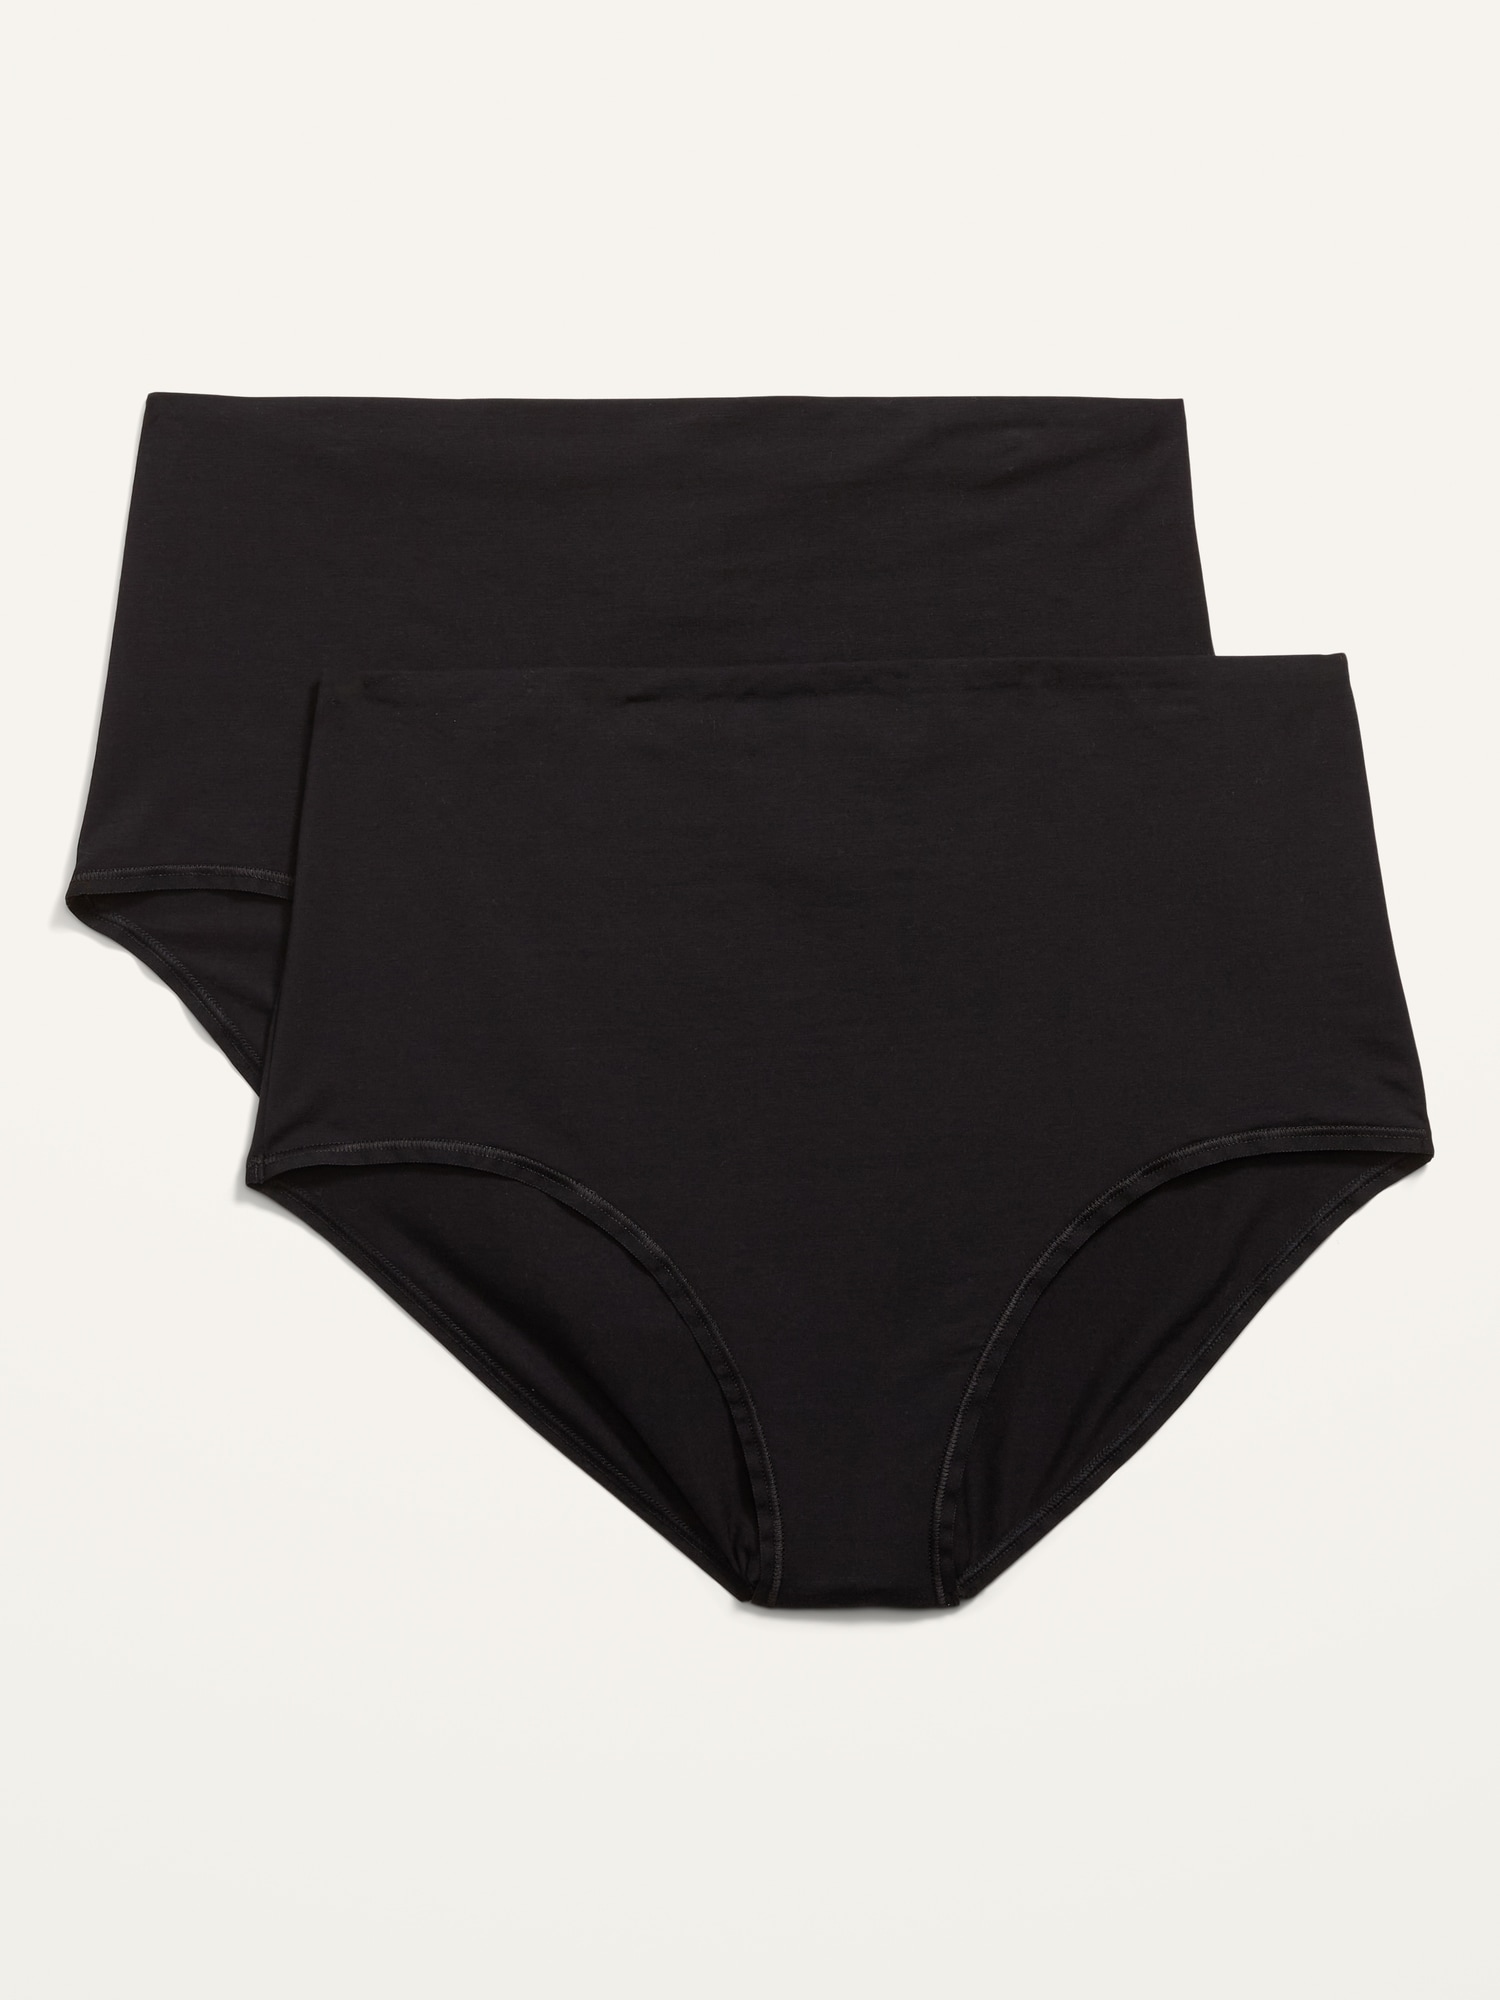 Buy JOYNCLEON Maternity Panties Under The Bump Pregnancy Underwear